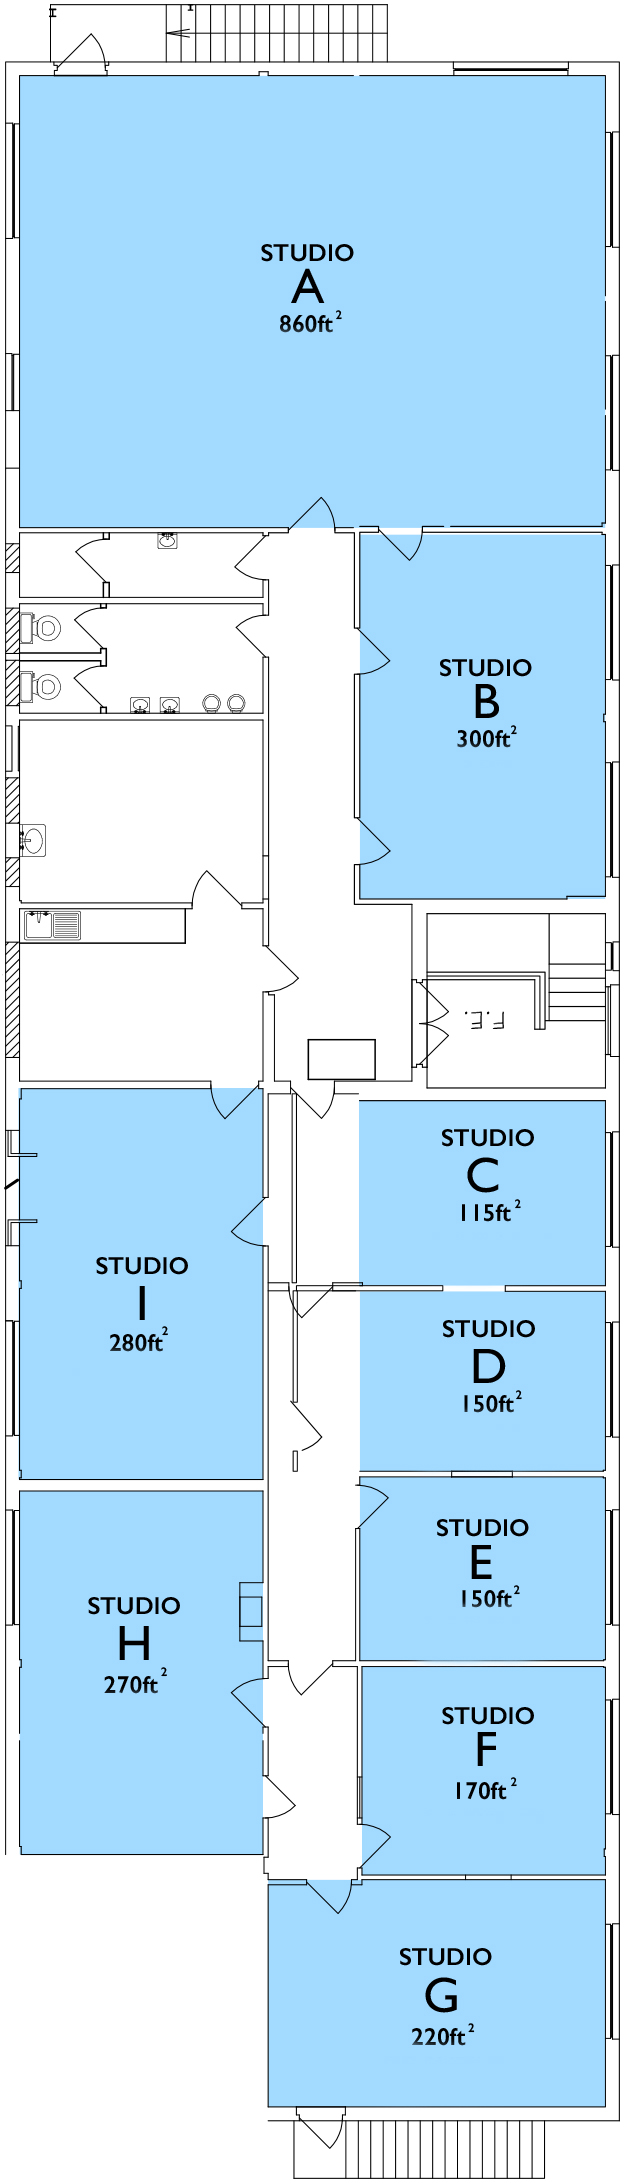 Studio plan at Worton Hall Studios